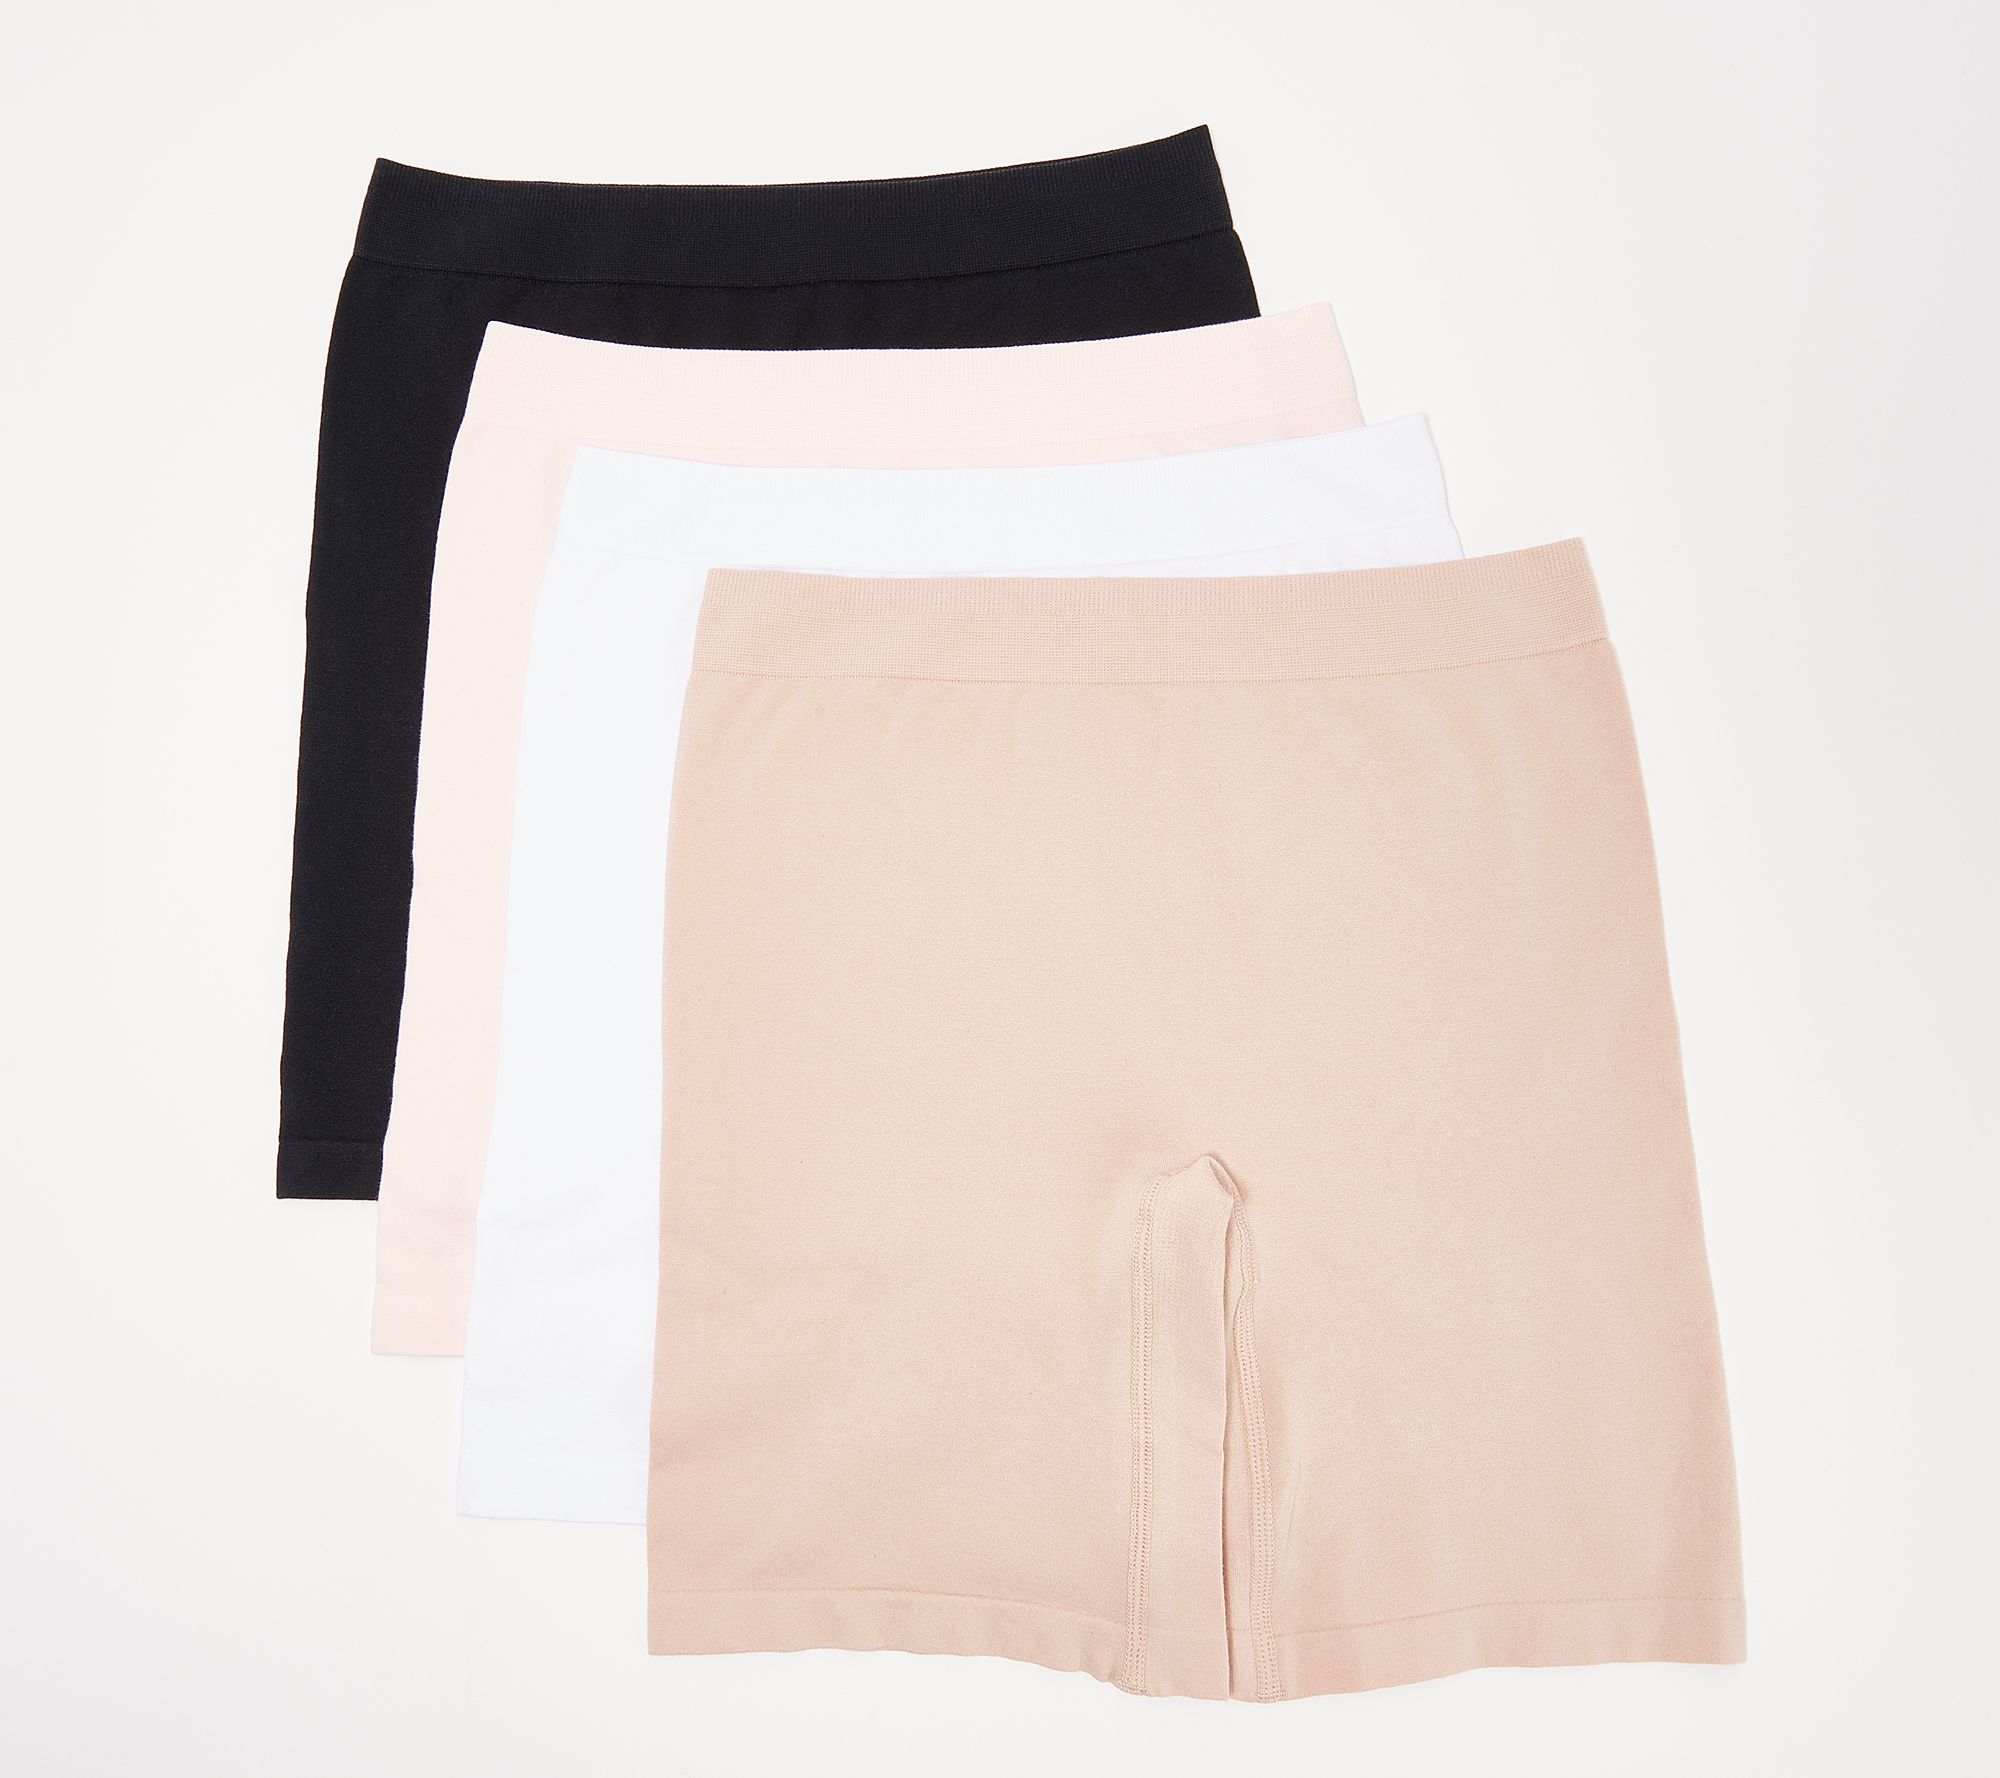 Womens Cotton Long Underwear : Target